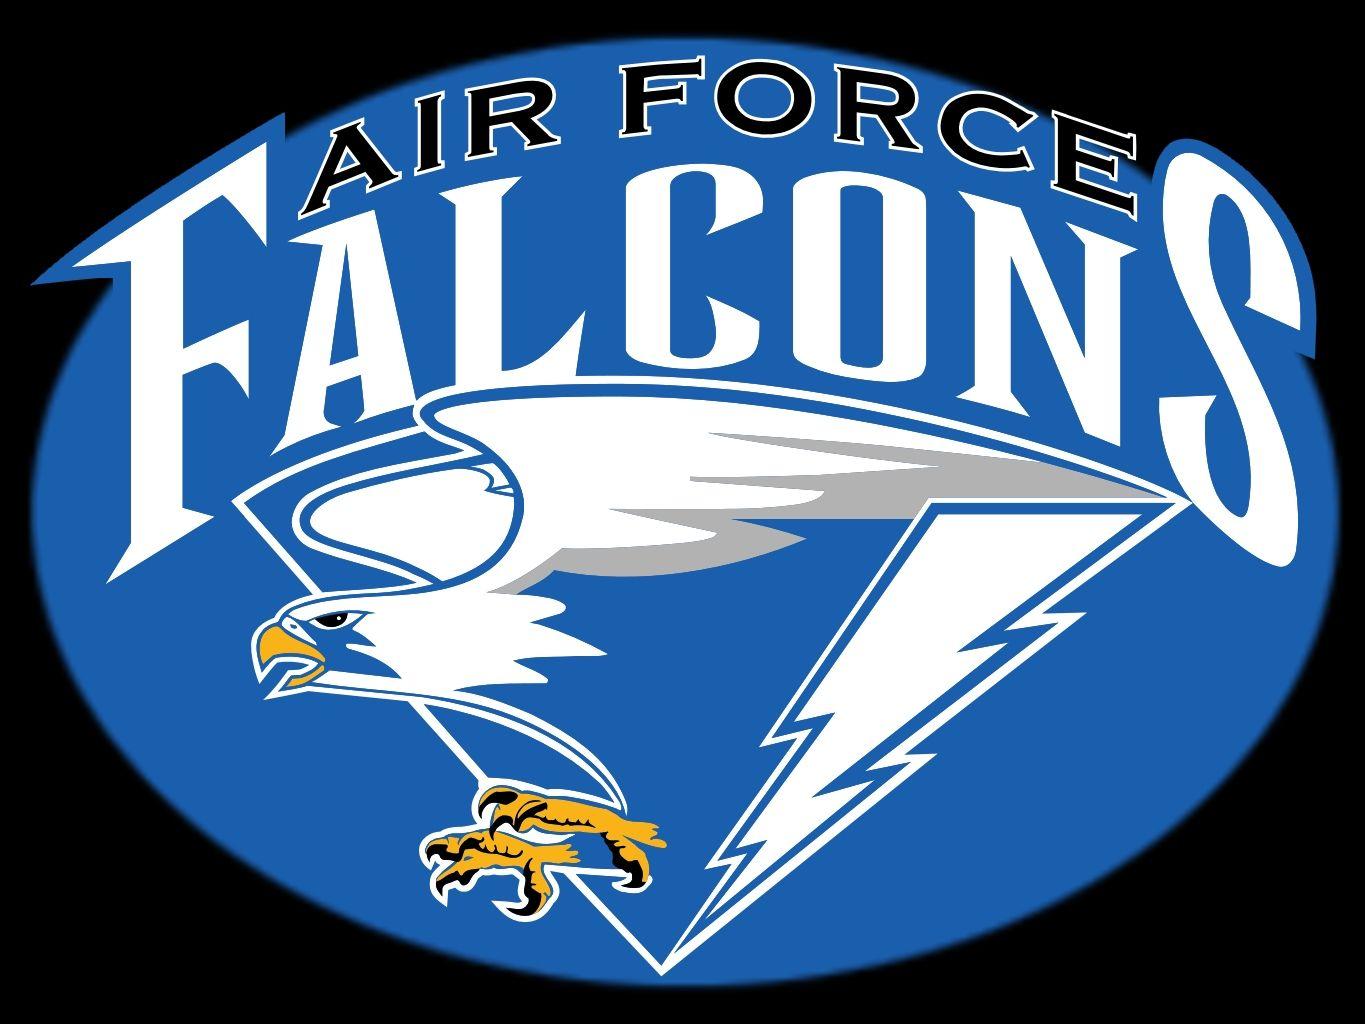 Air Force Falcons Logo - Air Force Falcons | Wallpaper and Cover Photos | Pinterest | Falcons ...